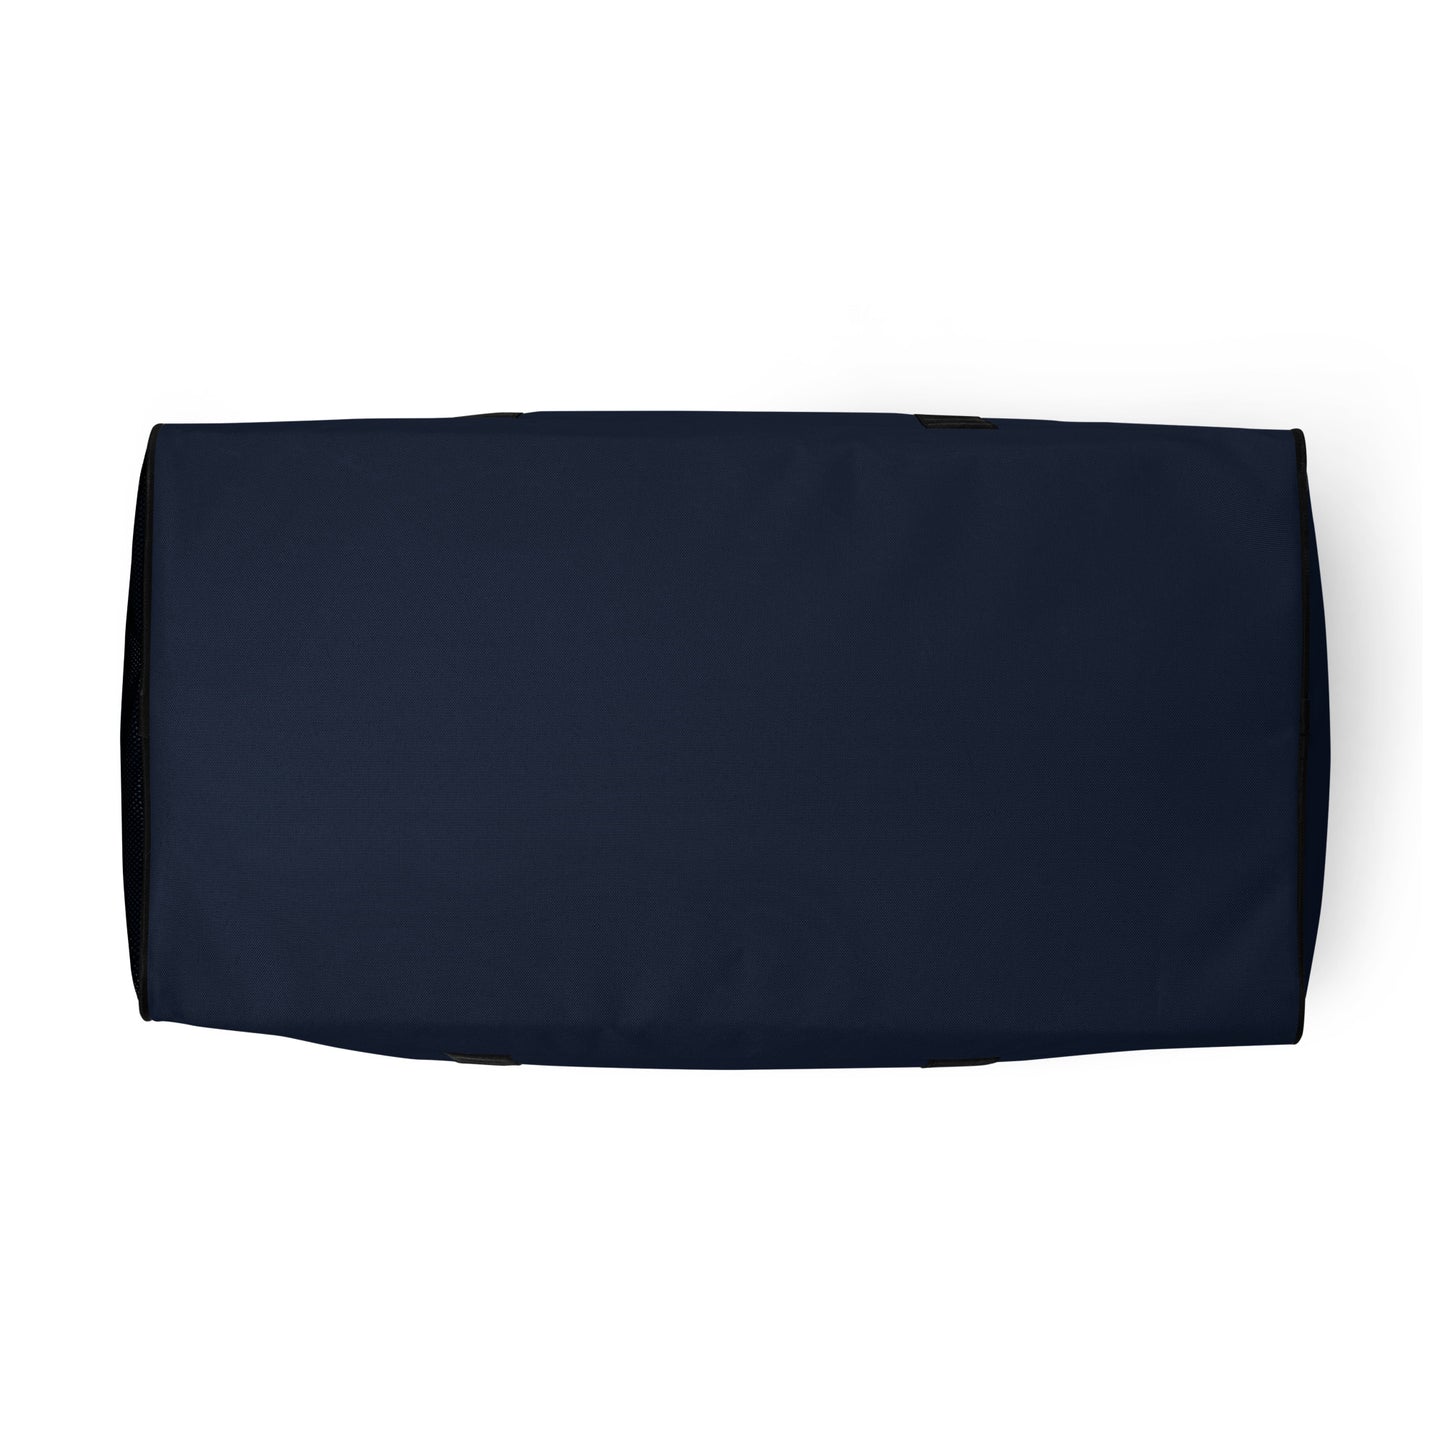 Blue Cornerstone Duffle bag